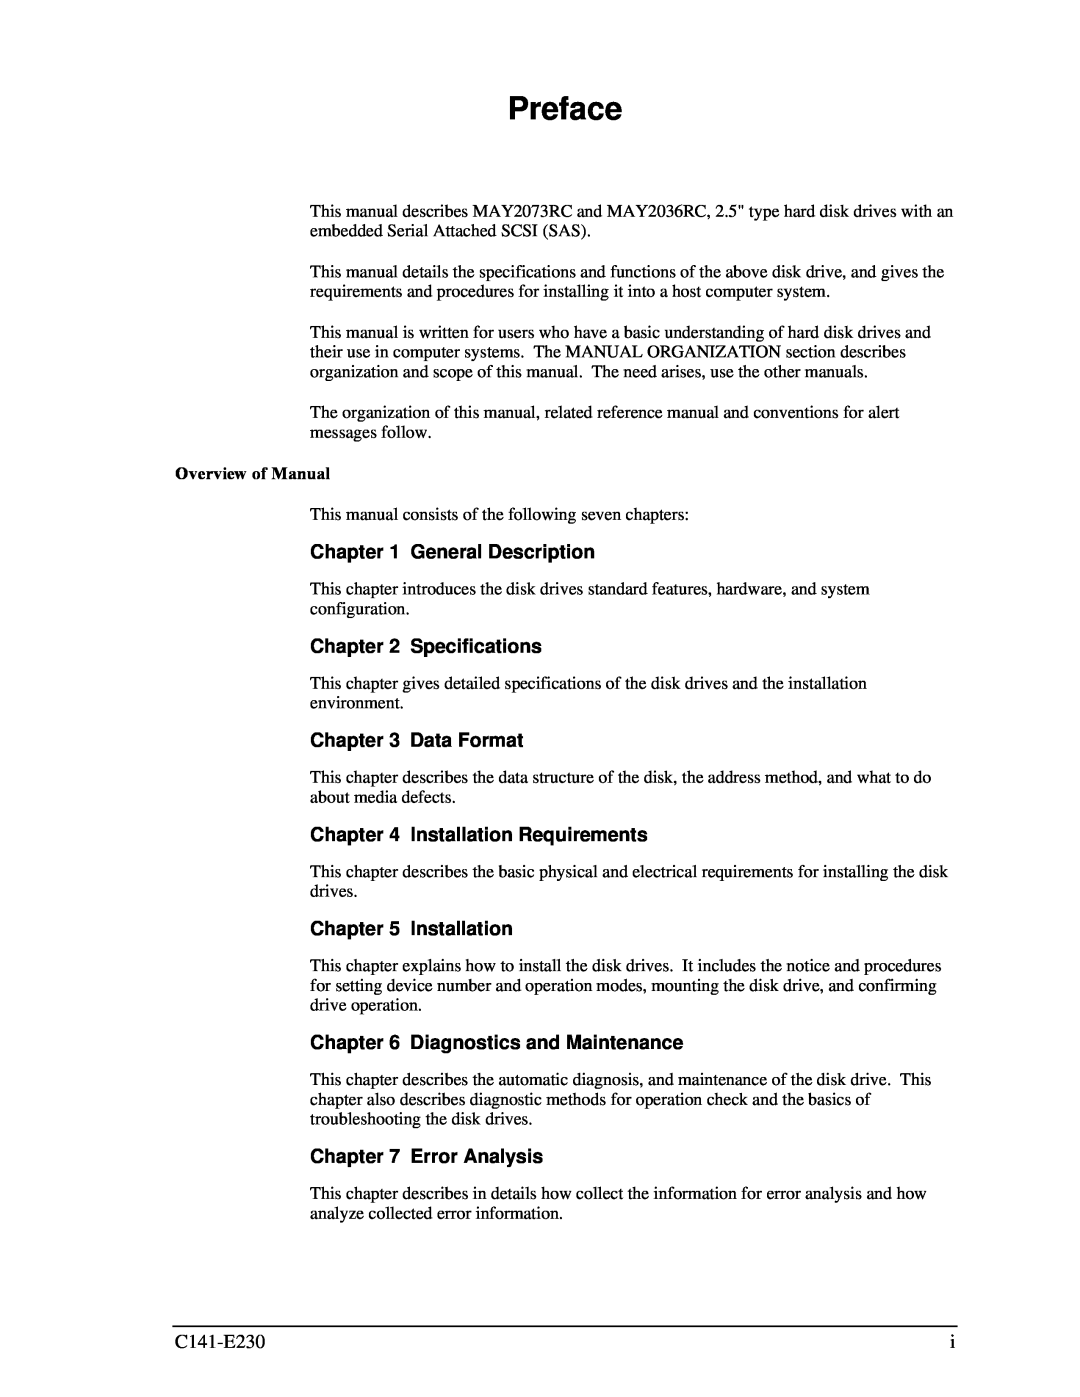 Fujitsu MAY2036RC Preface, General Description, Specifications, Data Format, Installation Requirements, Error Analysis 